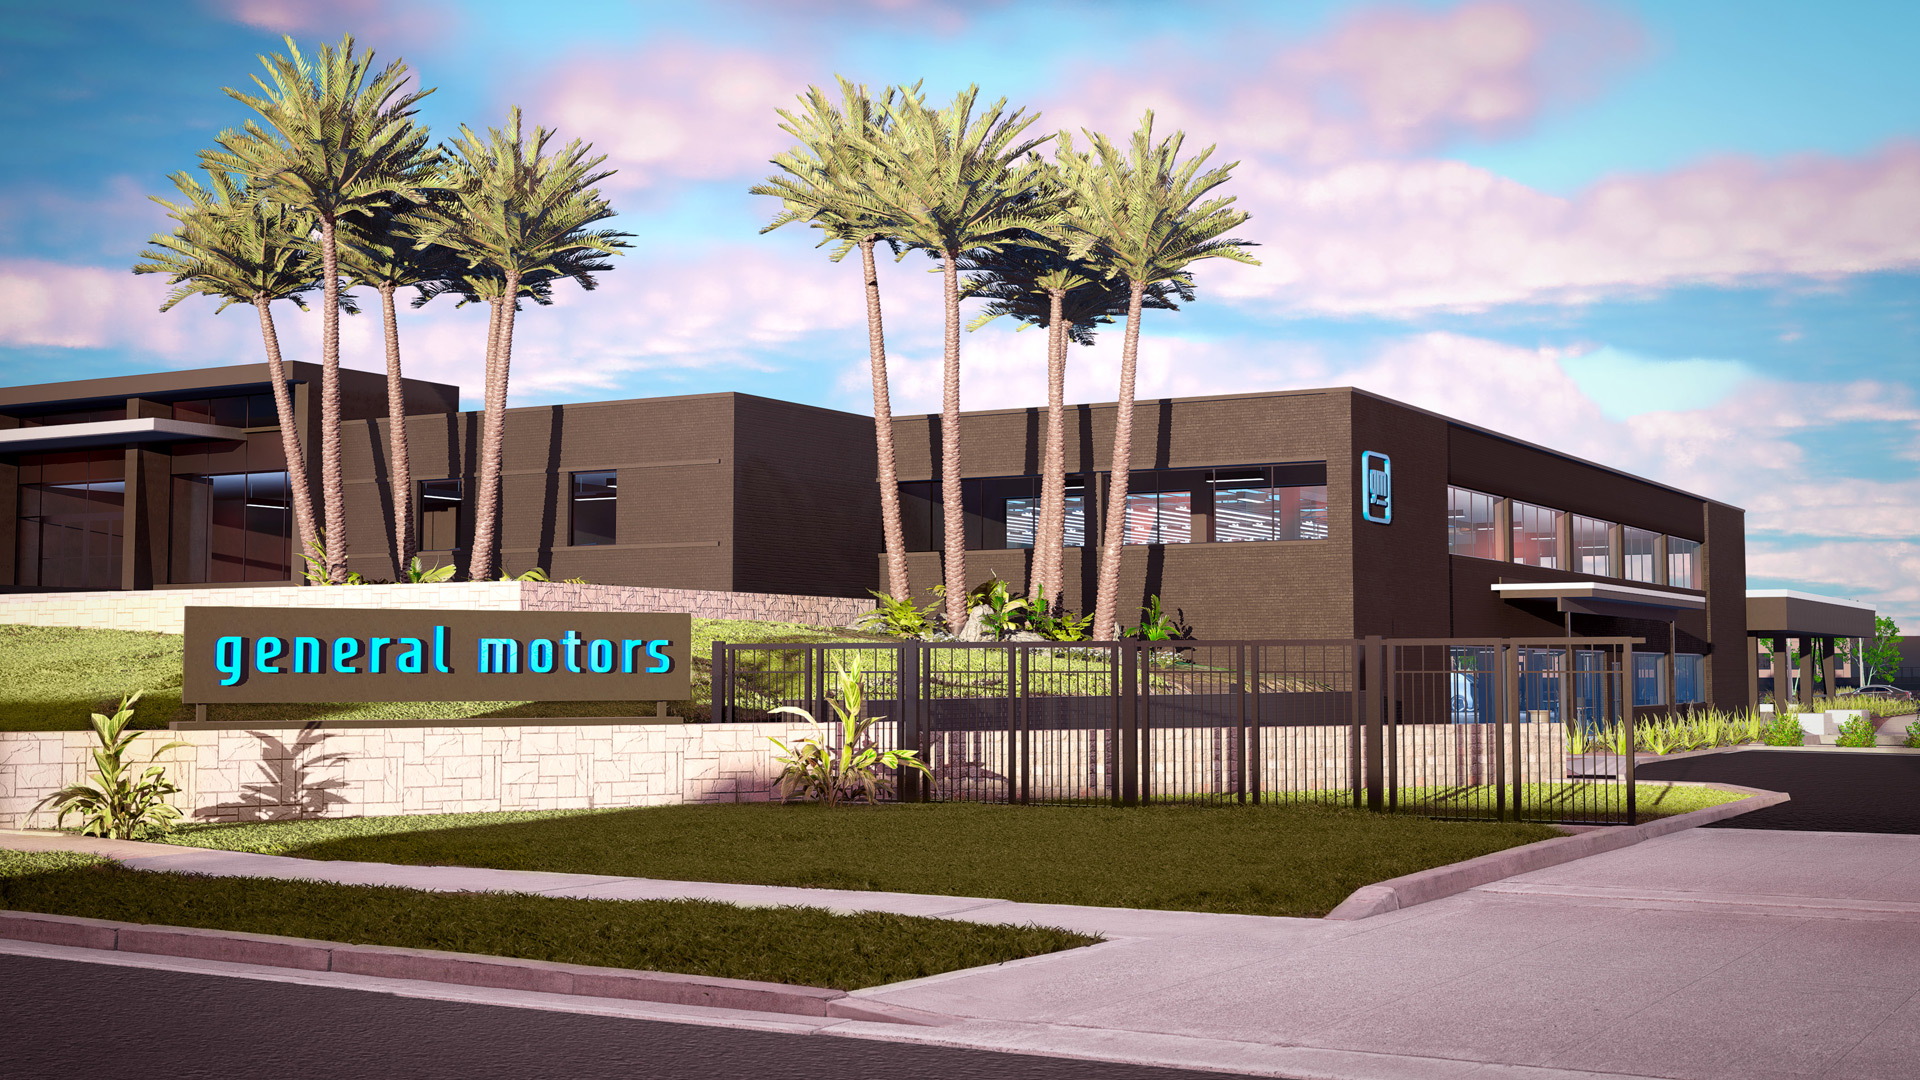 Artist's impression of GM design center to be built in Pasadena, California